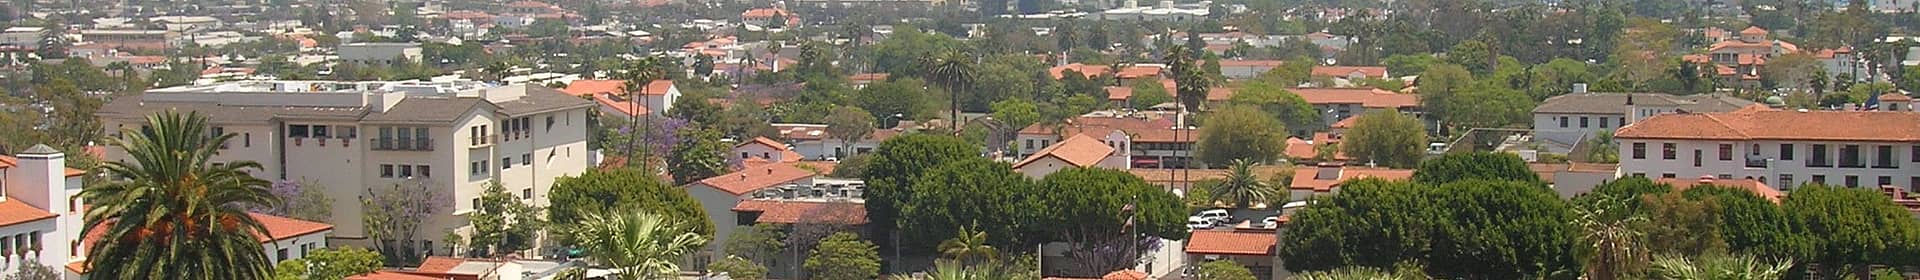 Santa Barbara